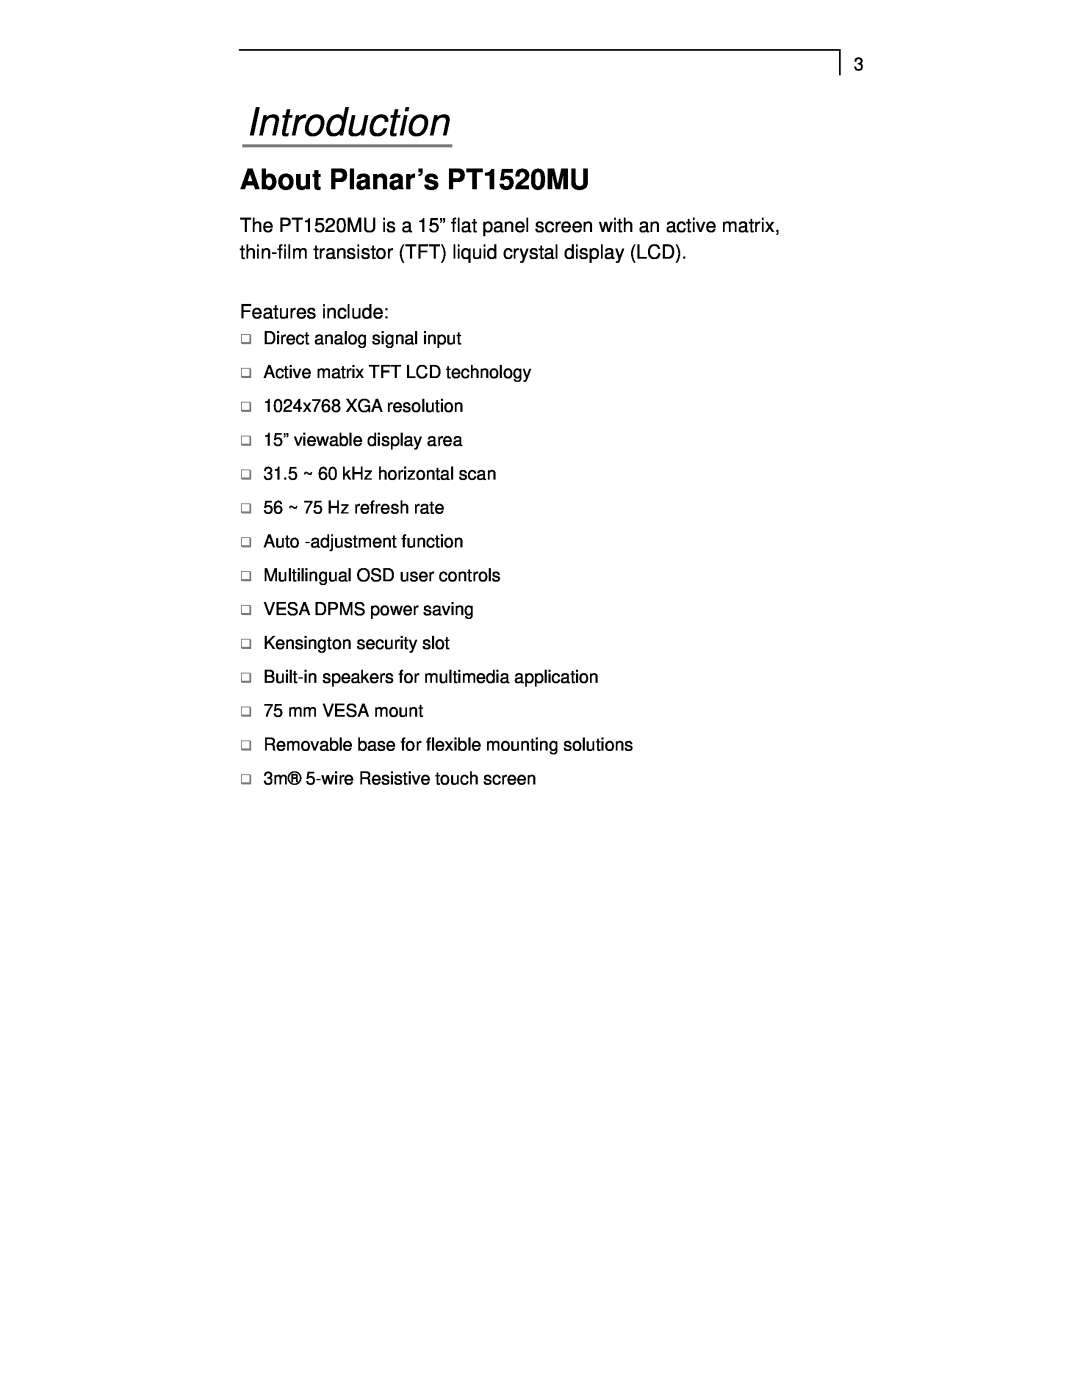 Planar manual Introduction, About Planar’s PT1520MU 